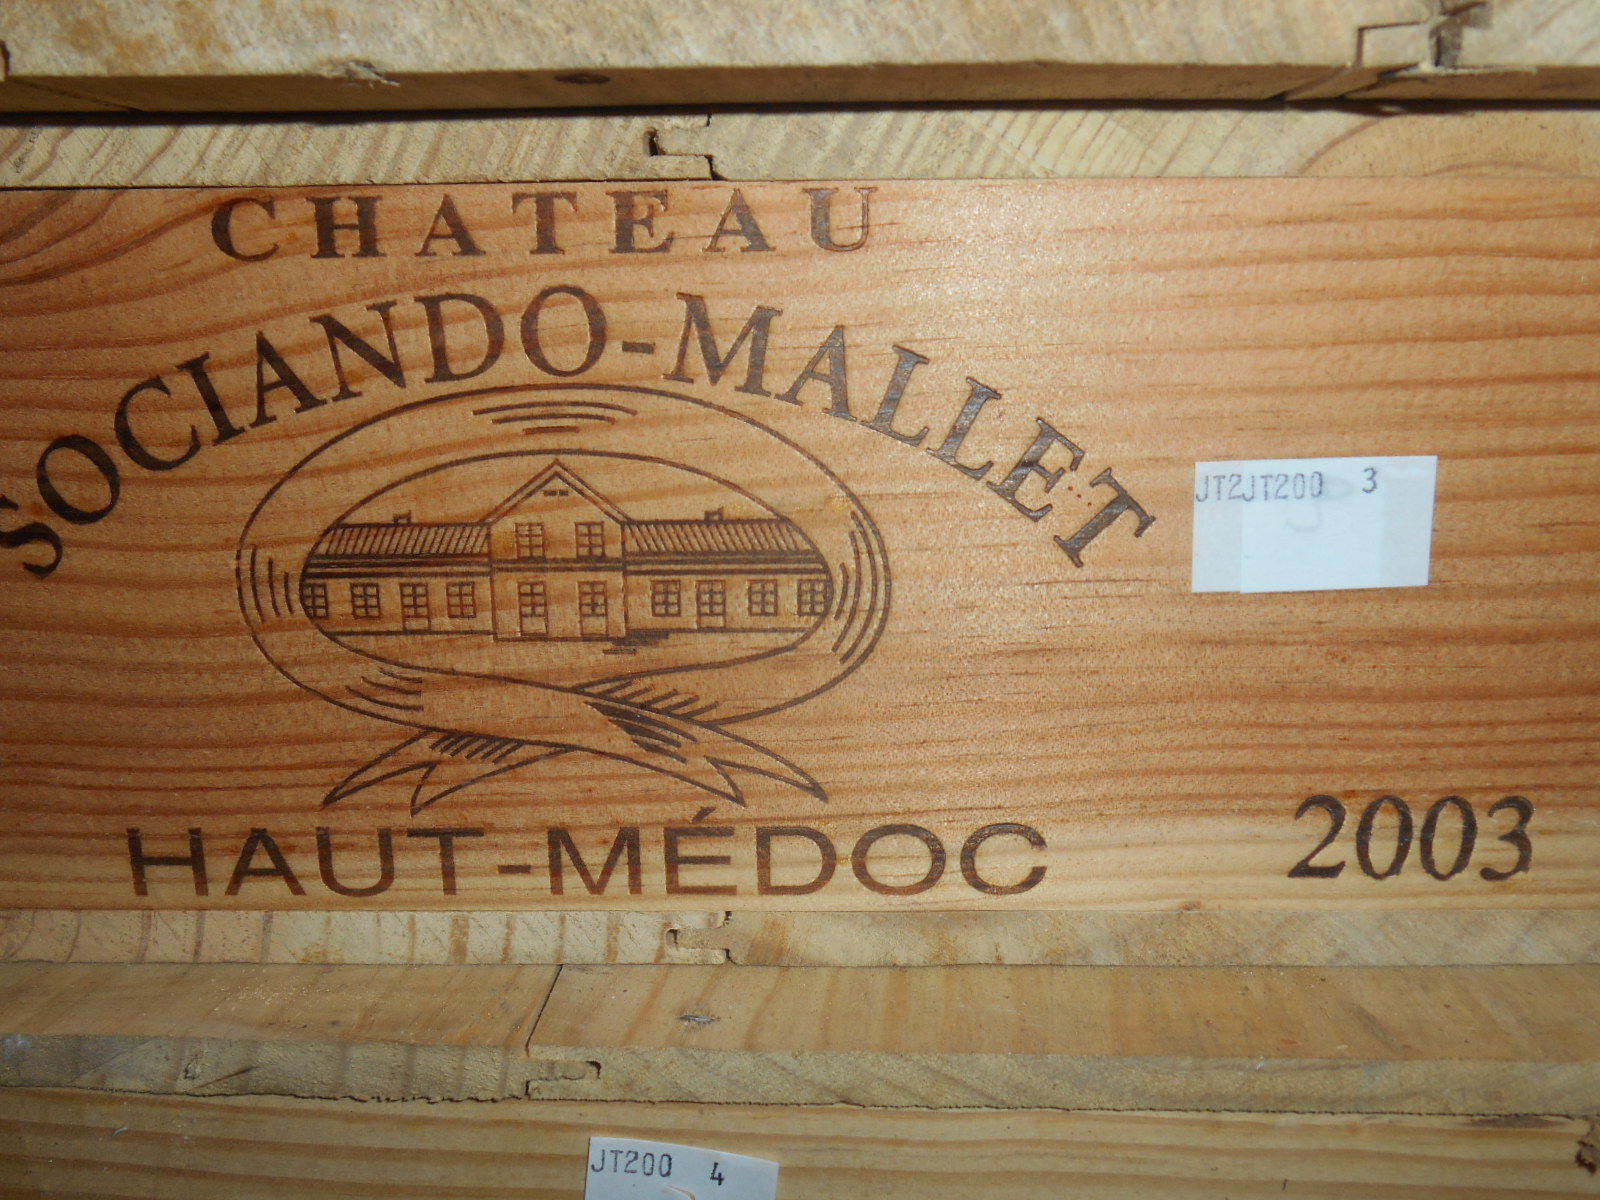 Chateau Sociando Mallet, Haut Medoc 2003, six bottles in owc